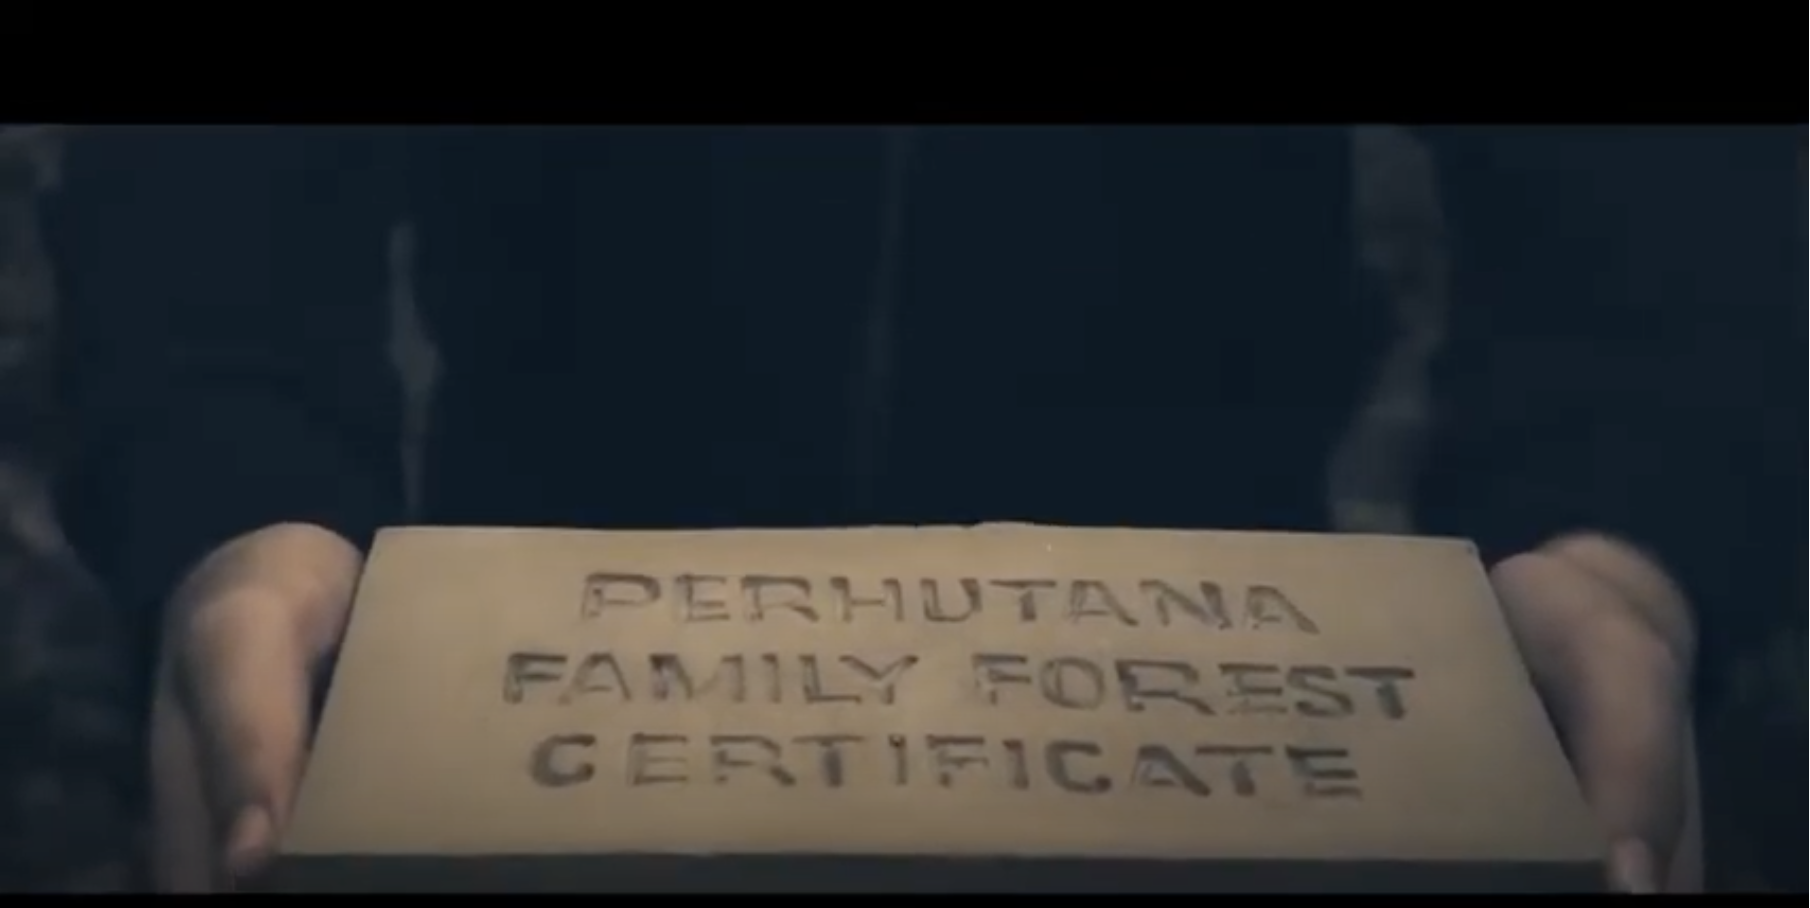 PERHUTANA_ForestCertificate